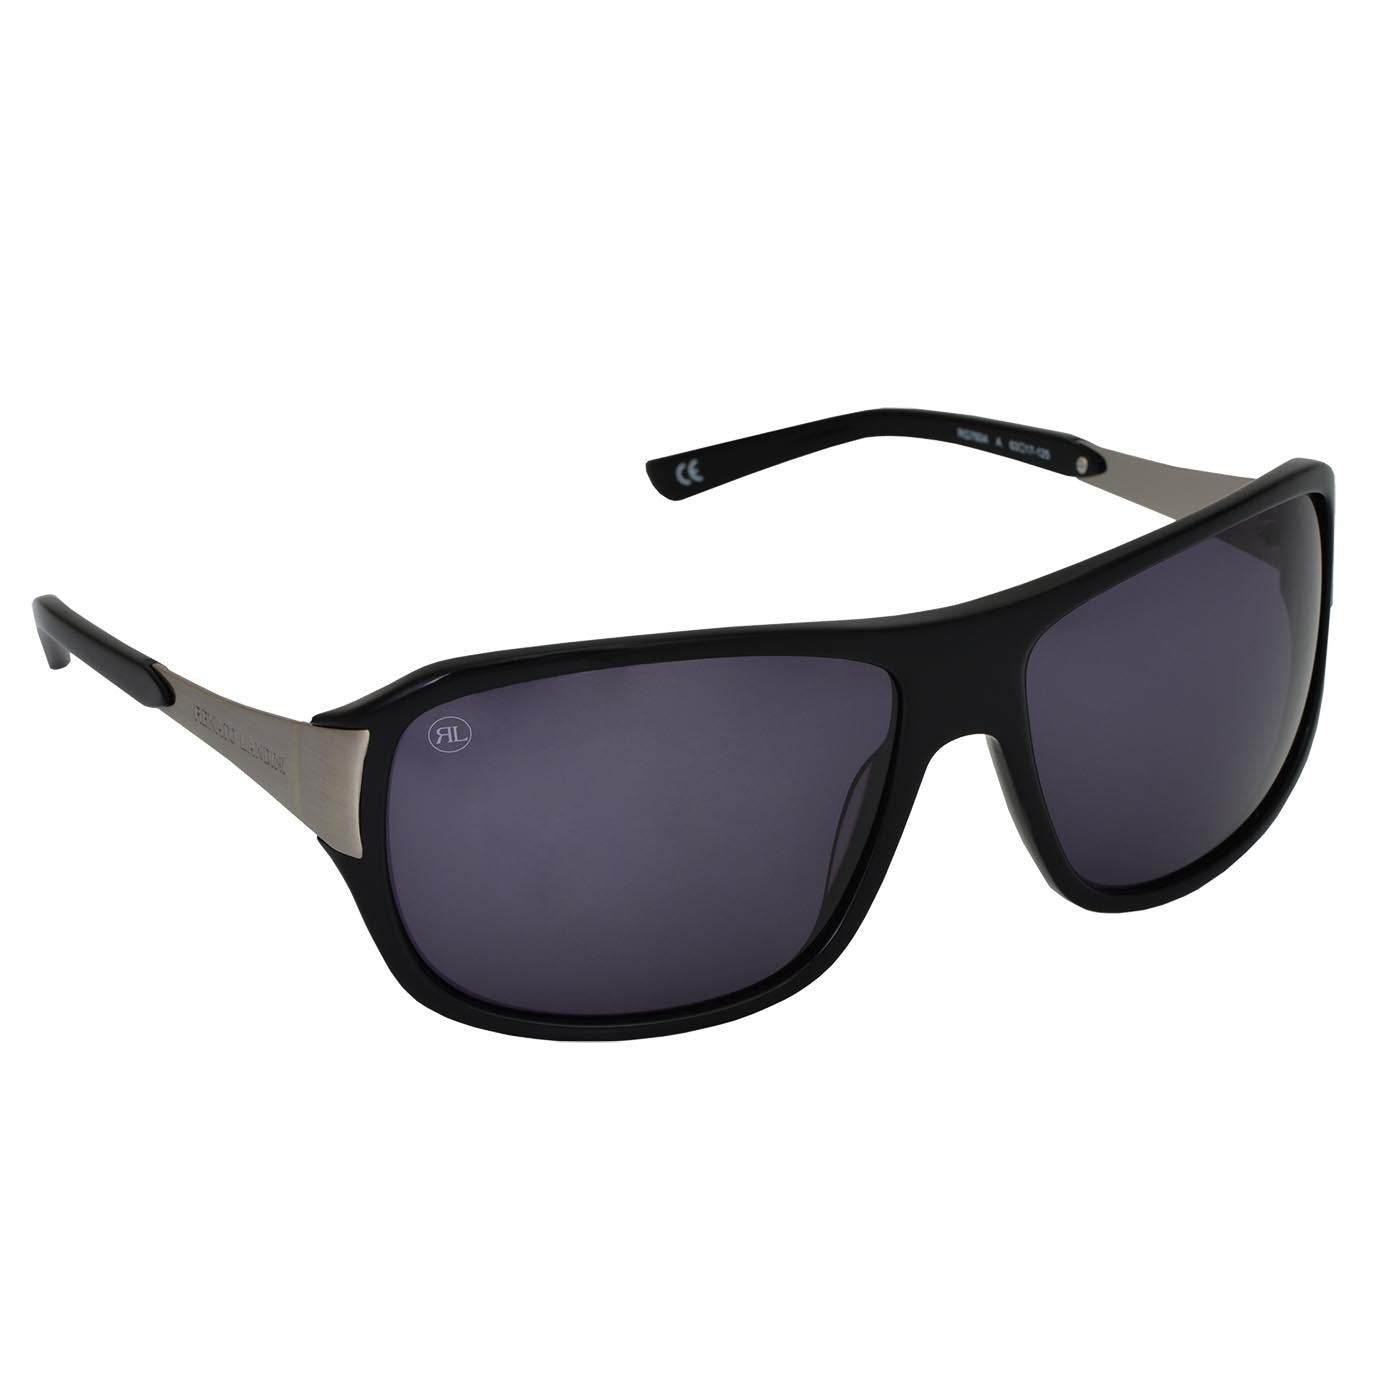 RENATO LANDINI Men's Sunglasses Black/ Oceanic